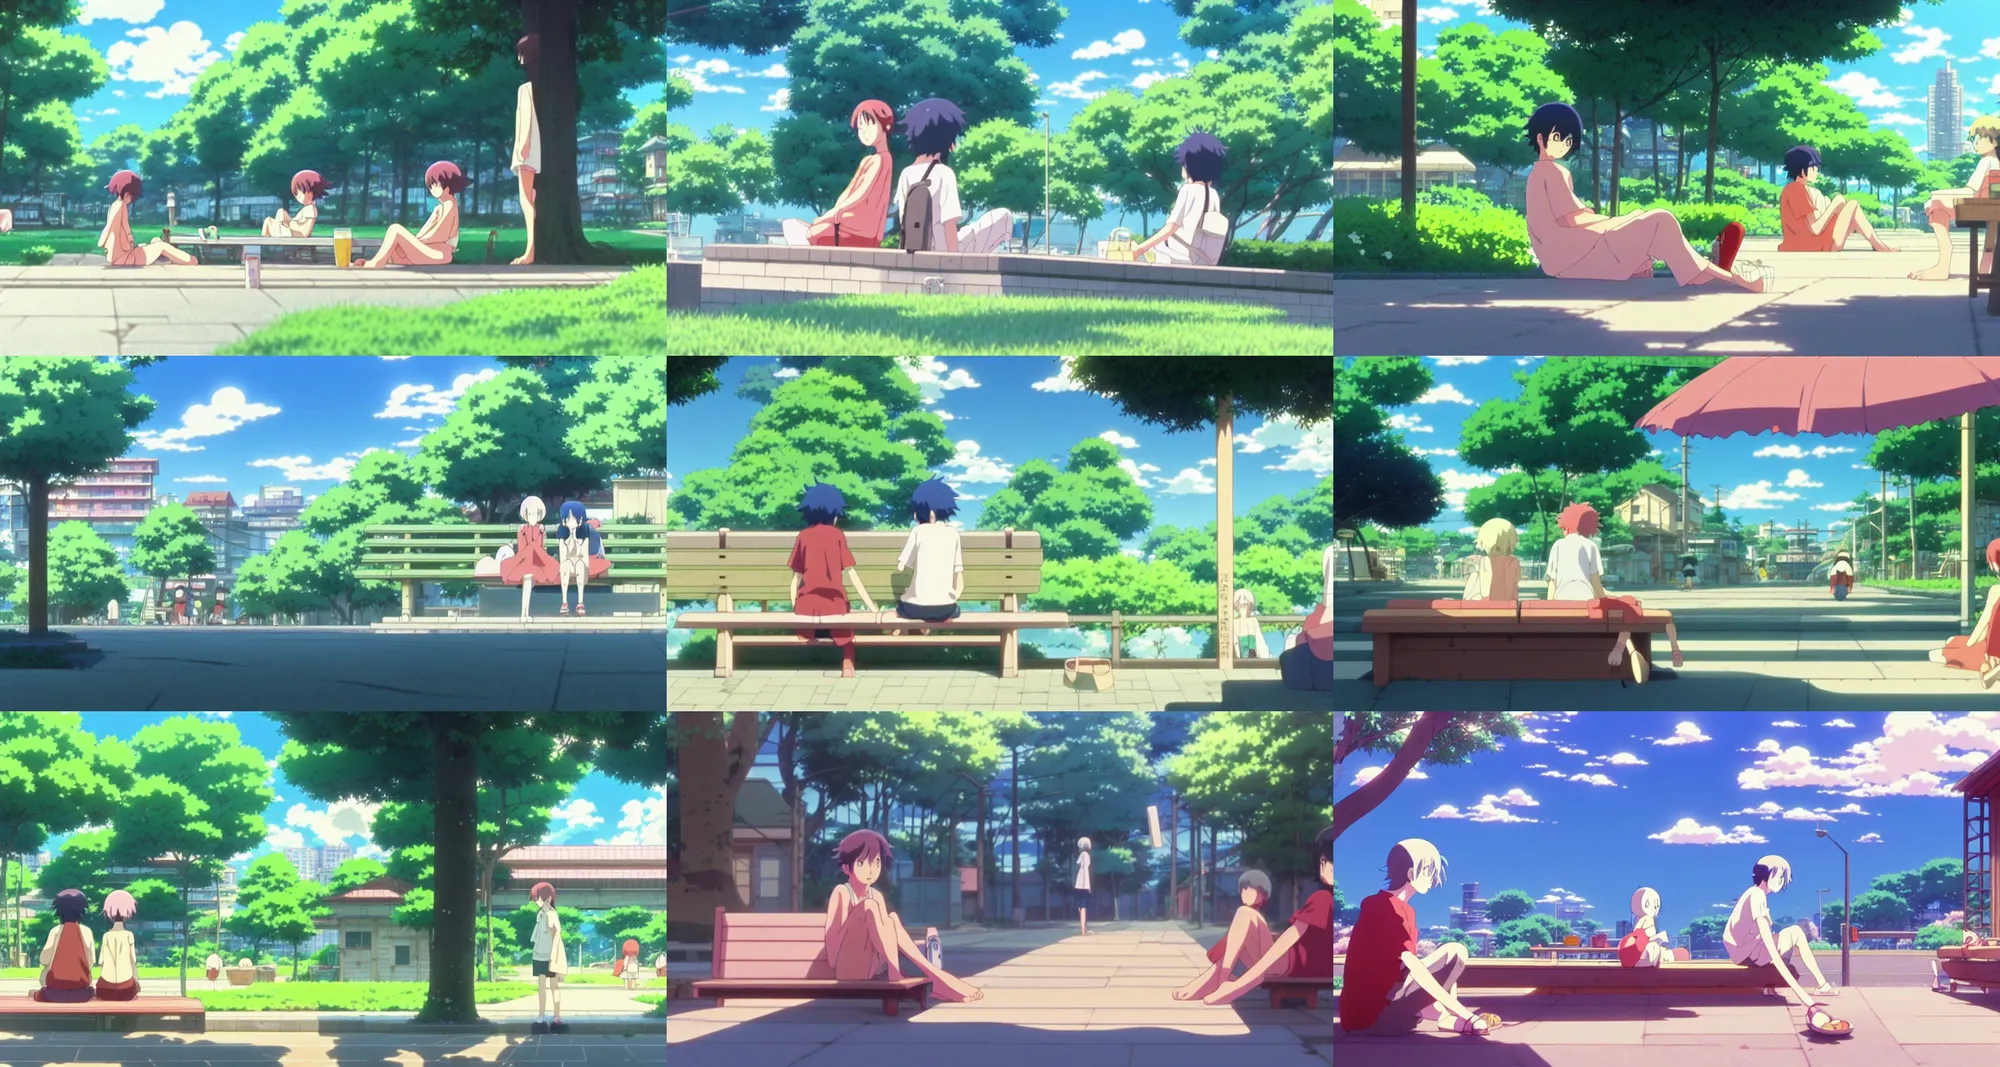 Prompt: beautiful slice of life anime scene of arcade, summer, relaxing, calm, cozy, peaceful, by mamoru hosoda, hayao miyazaki, makoto shinkai